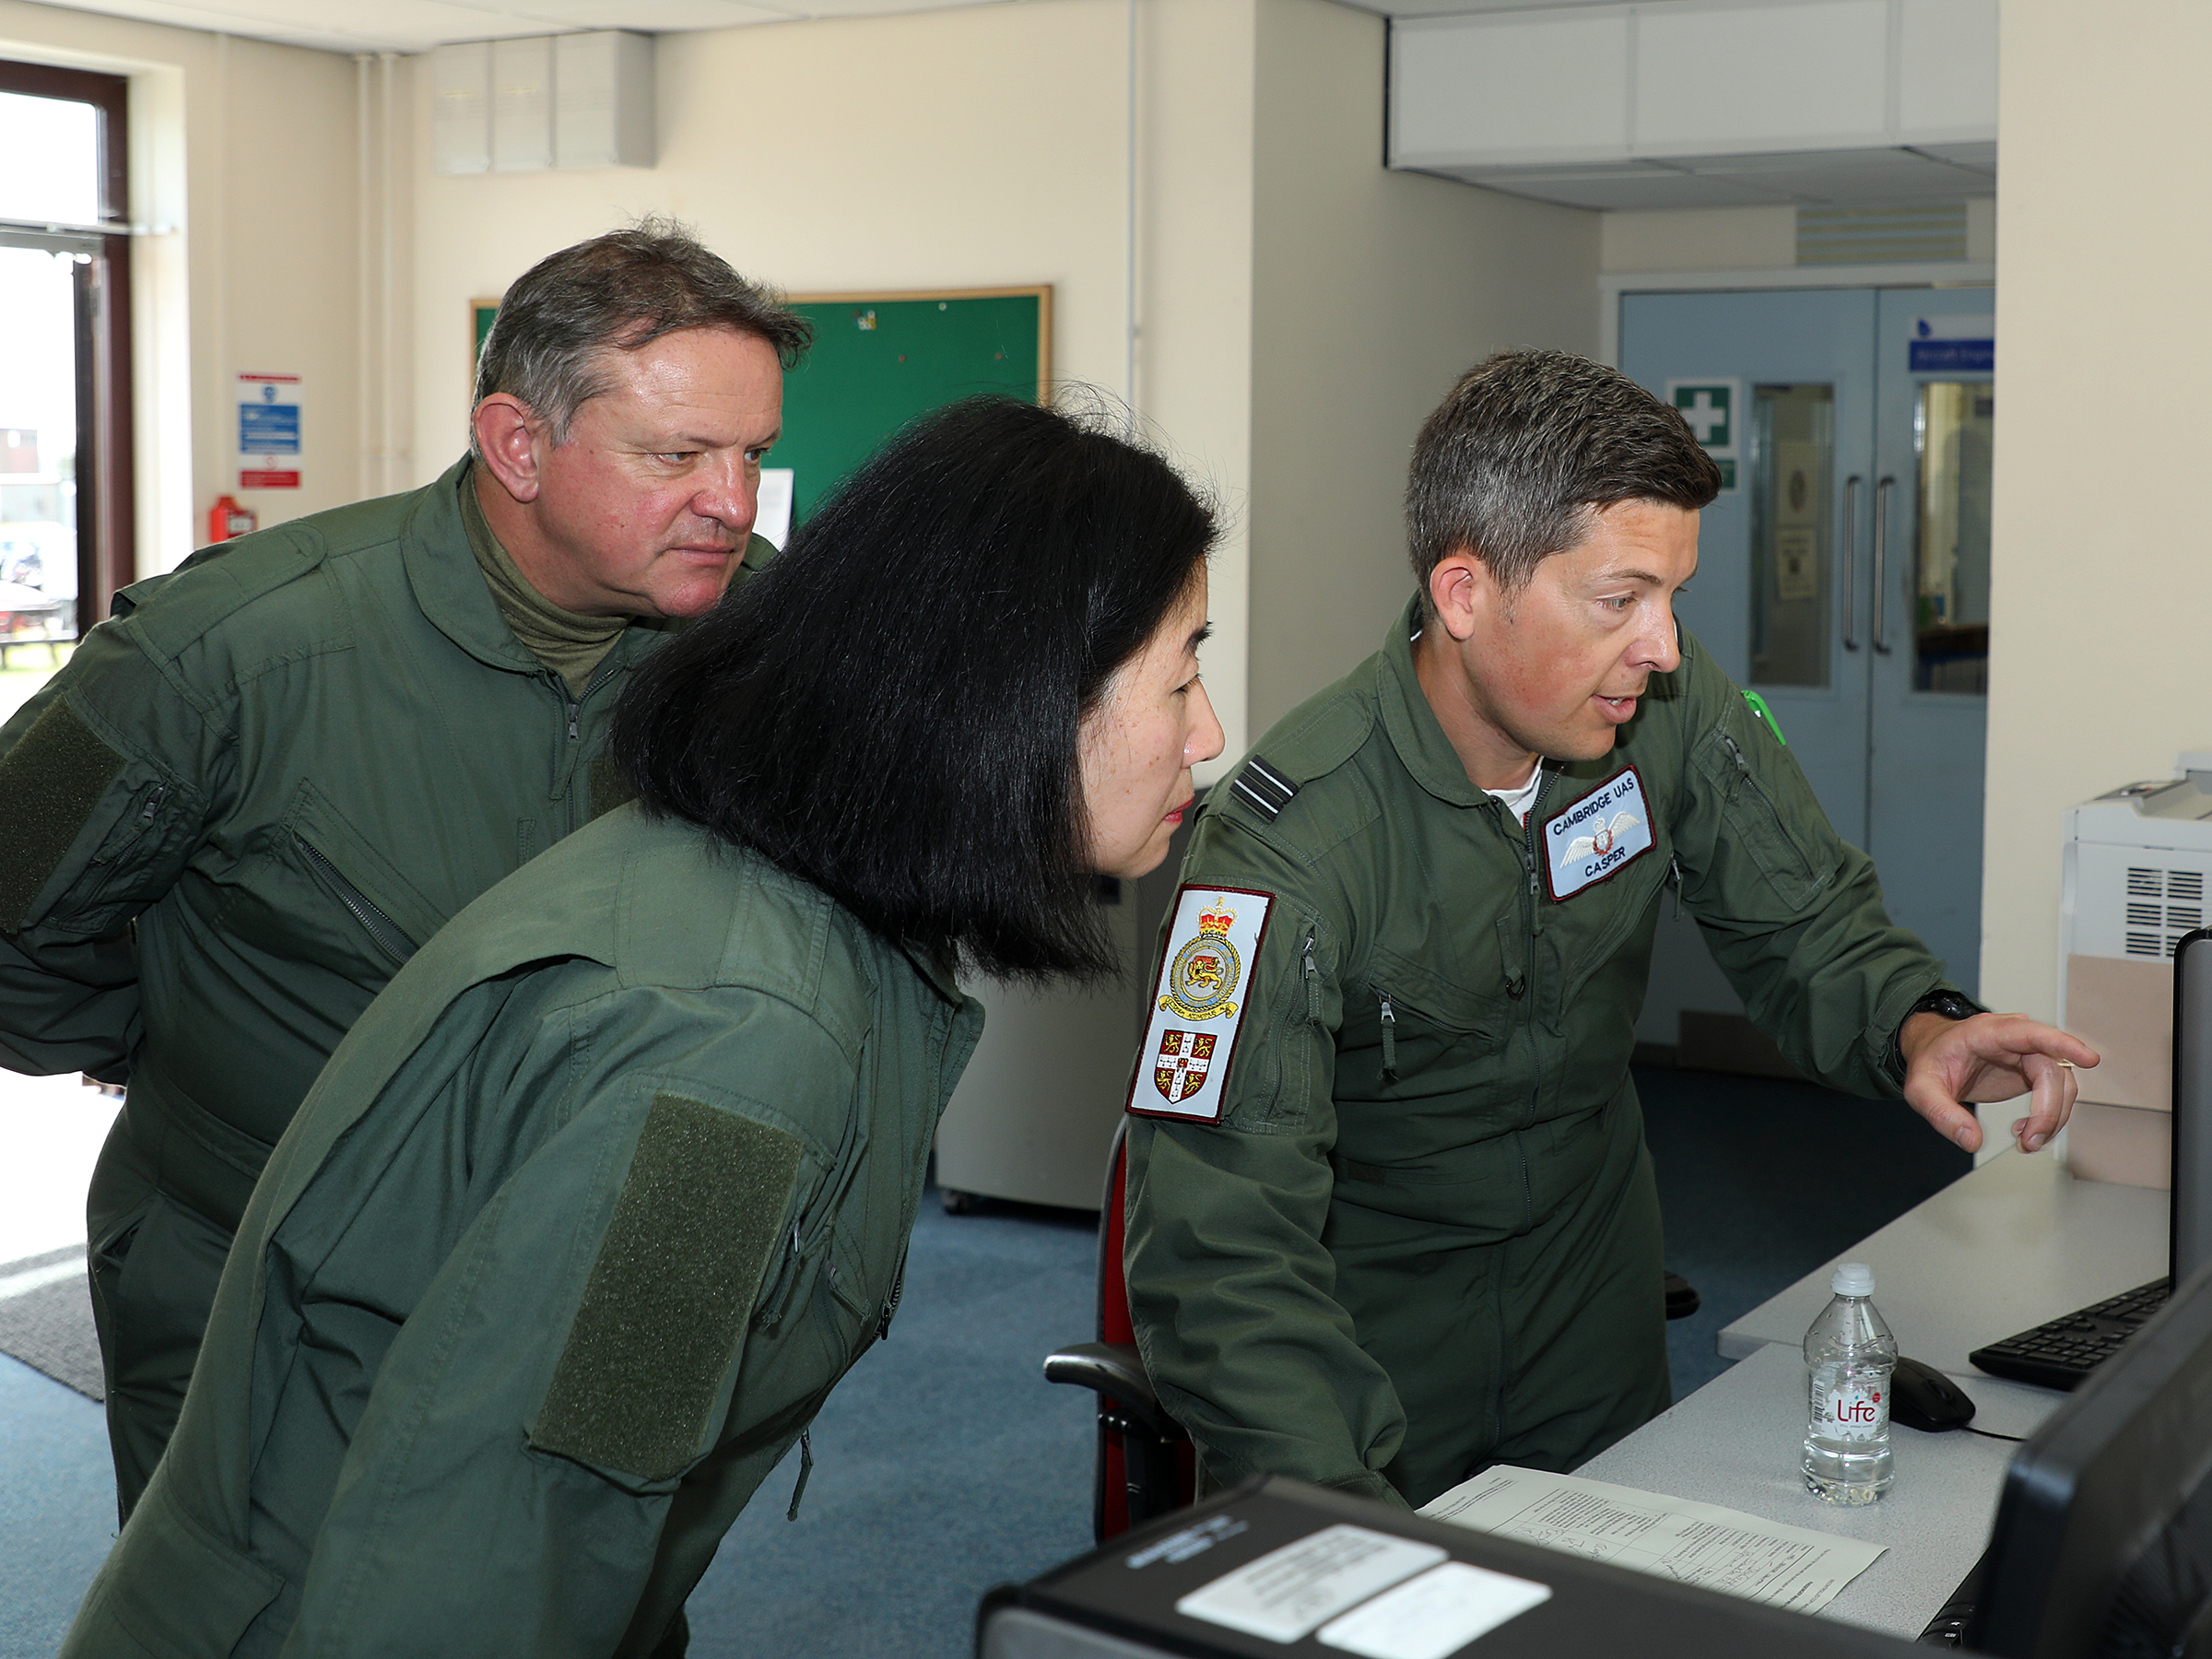 From left to right: Mr. John Crompton, Mrs Jennifer Crompton and Flying Instructor Flight Lieutenant Casper MacCormack